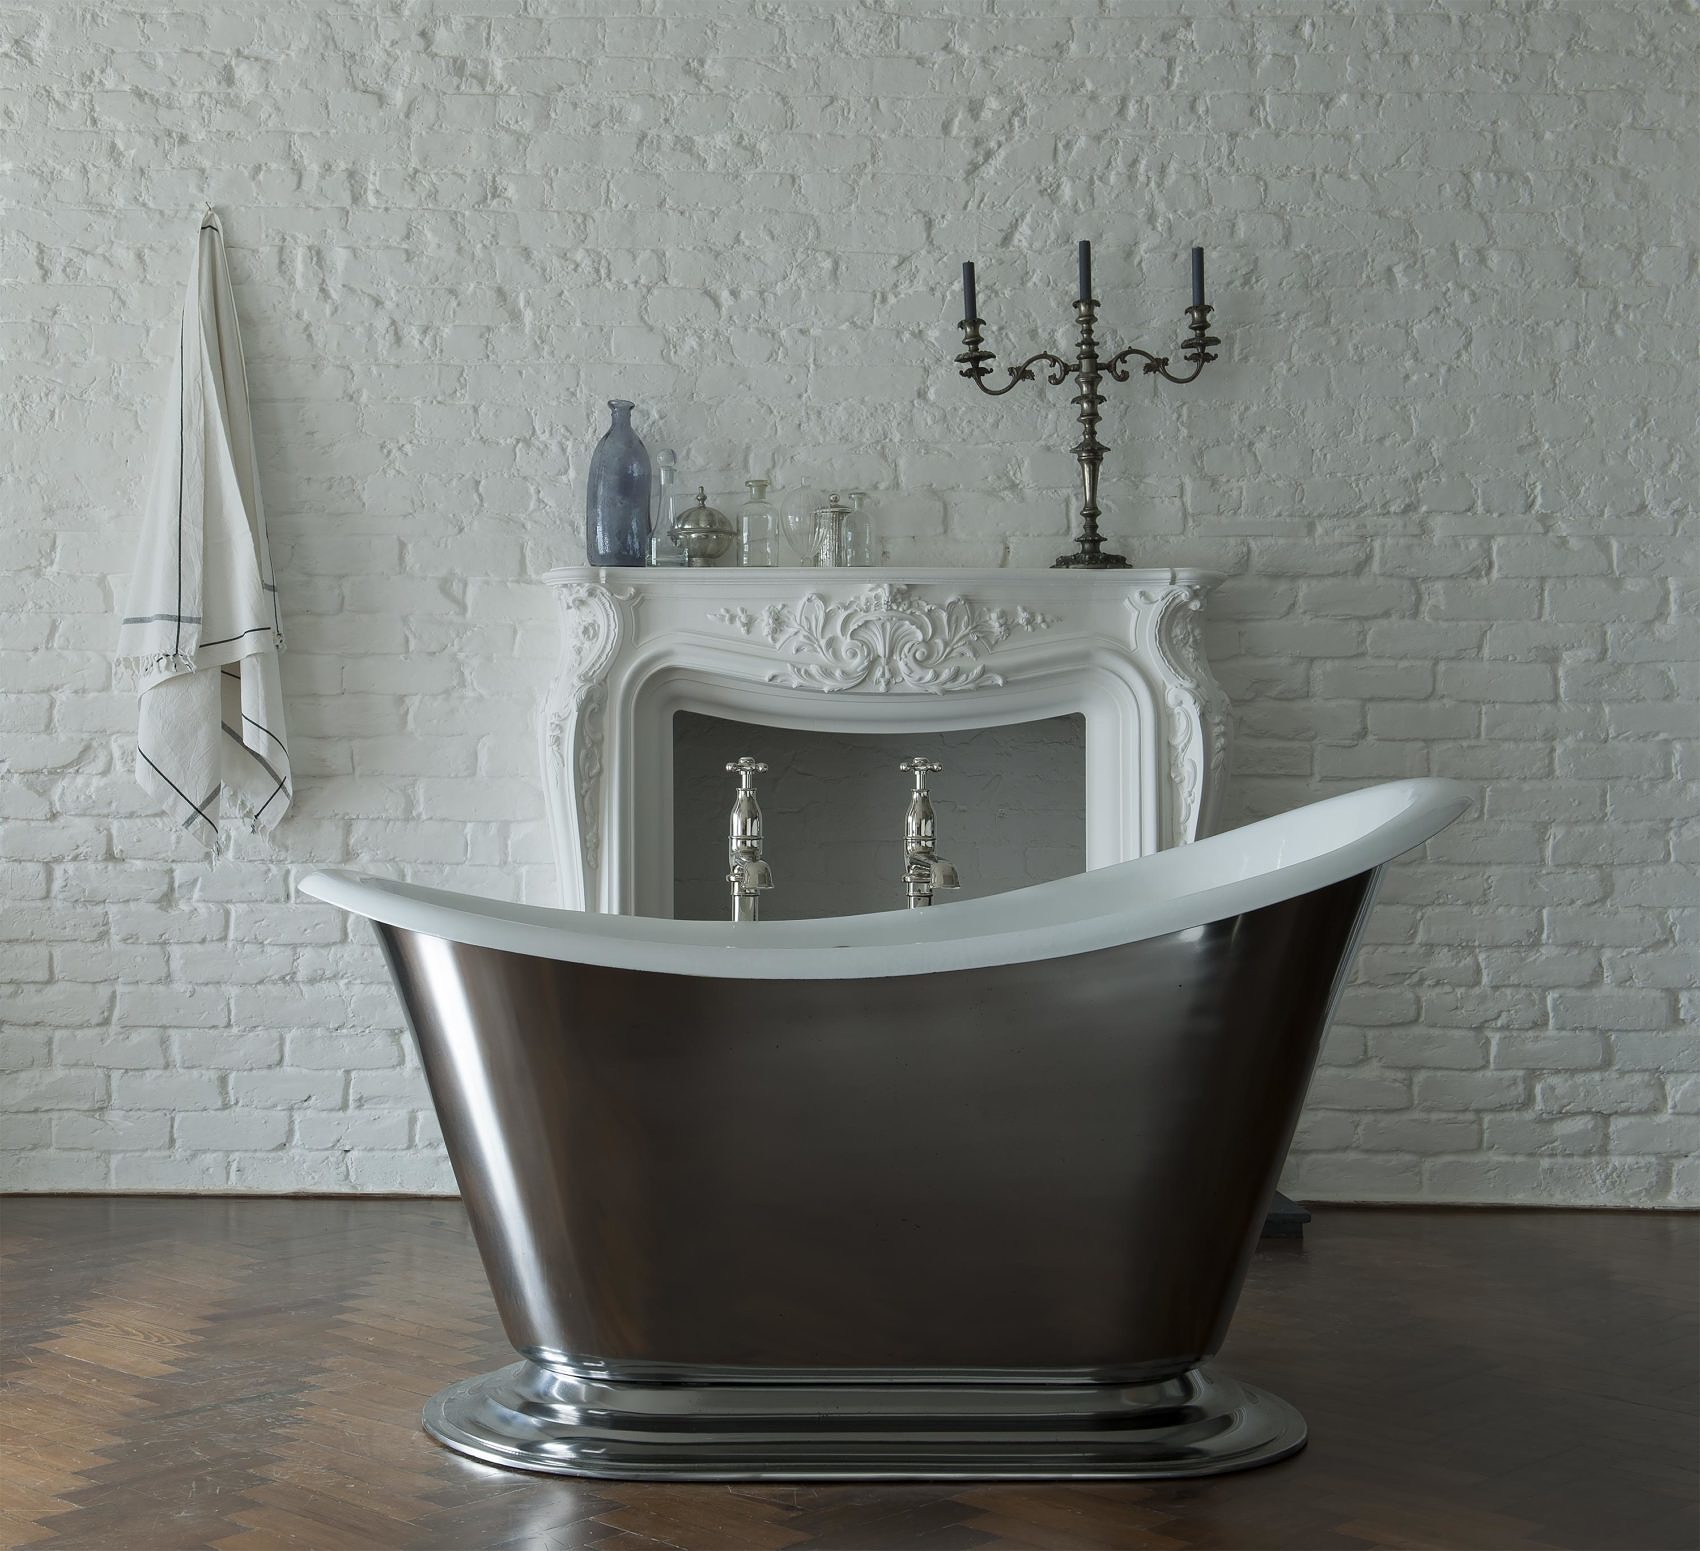 The Morar cast iron slipper bath tub